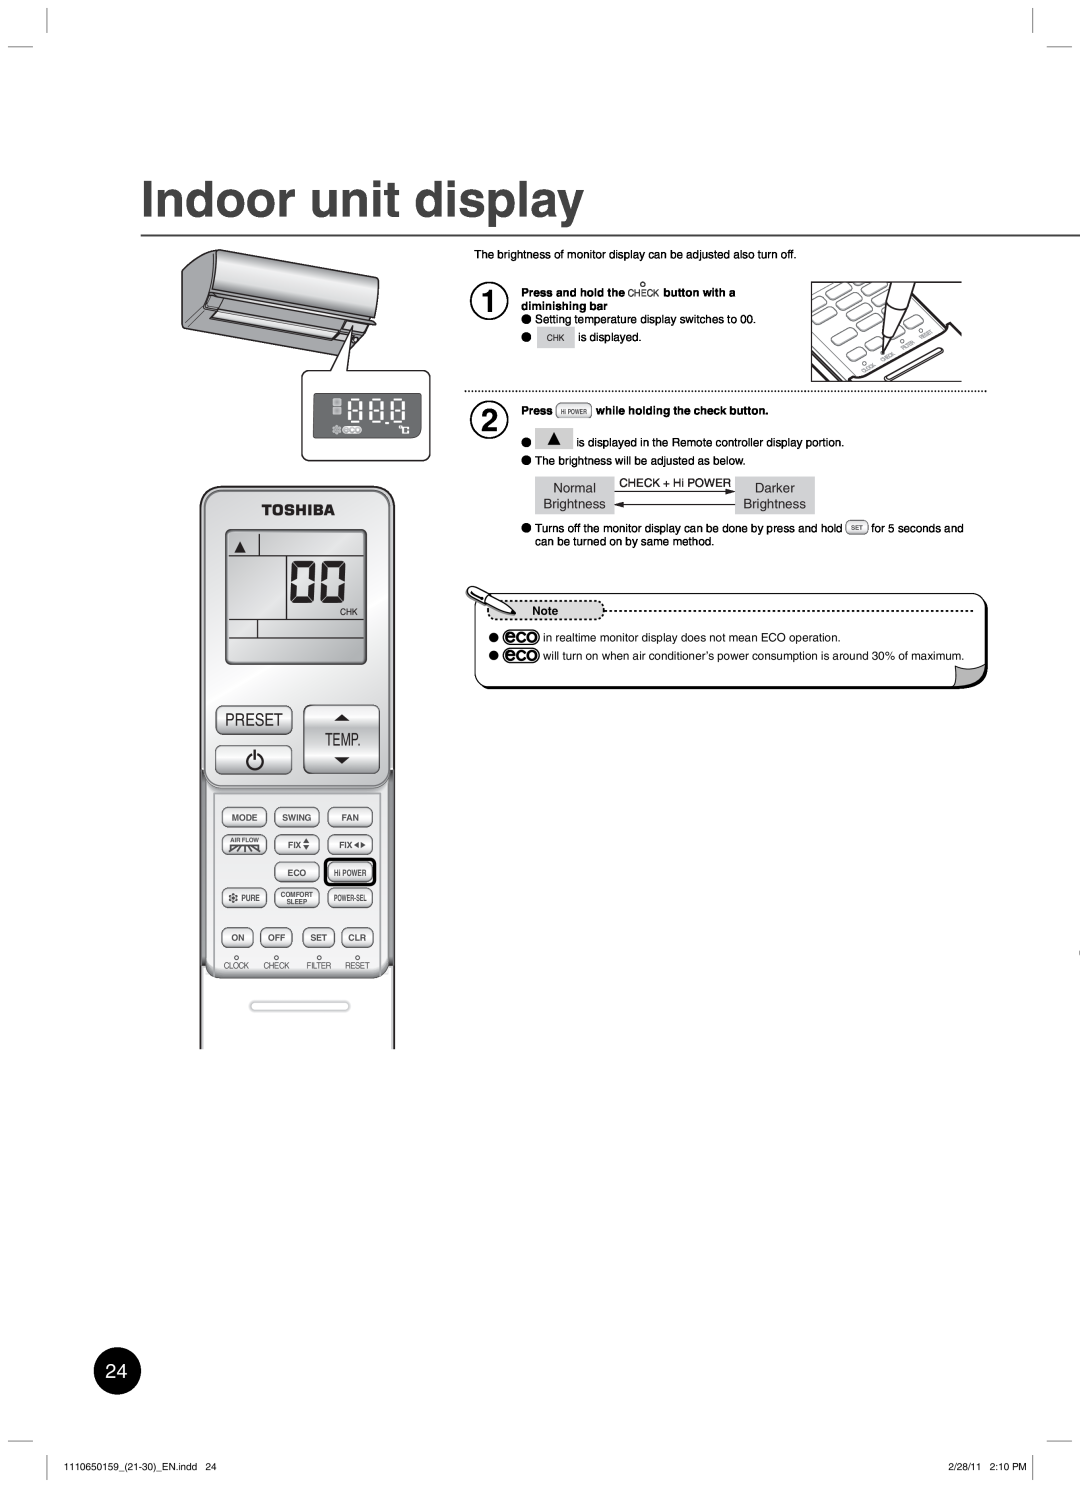 Toshiba RAS-10JKCVP owner manual Indoor unit display, Preset Temp, Normal, Darker 